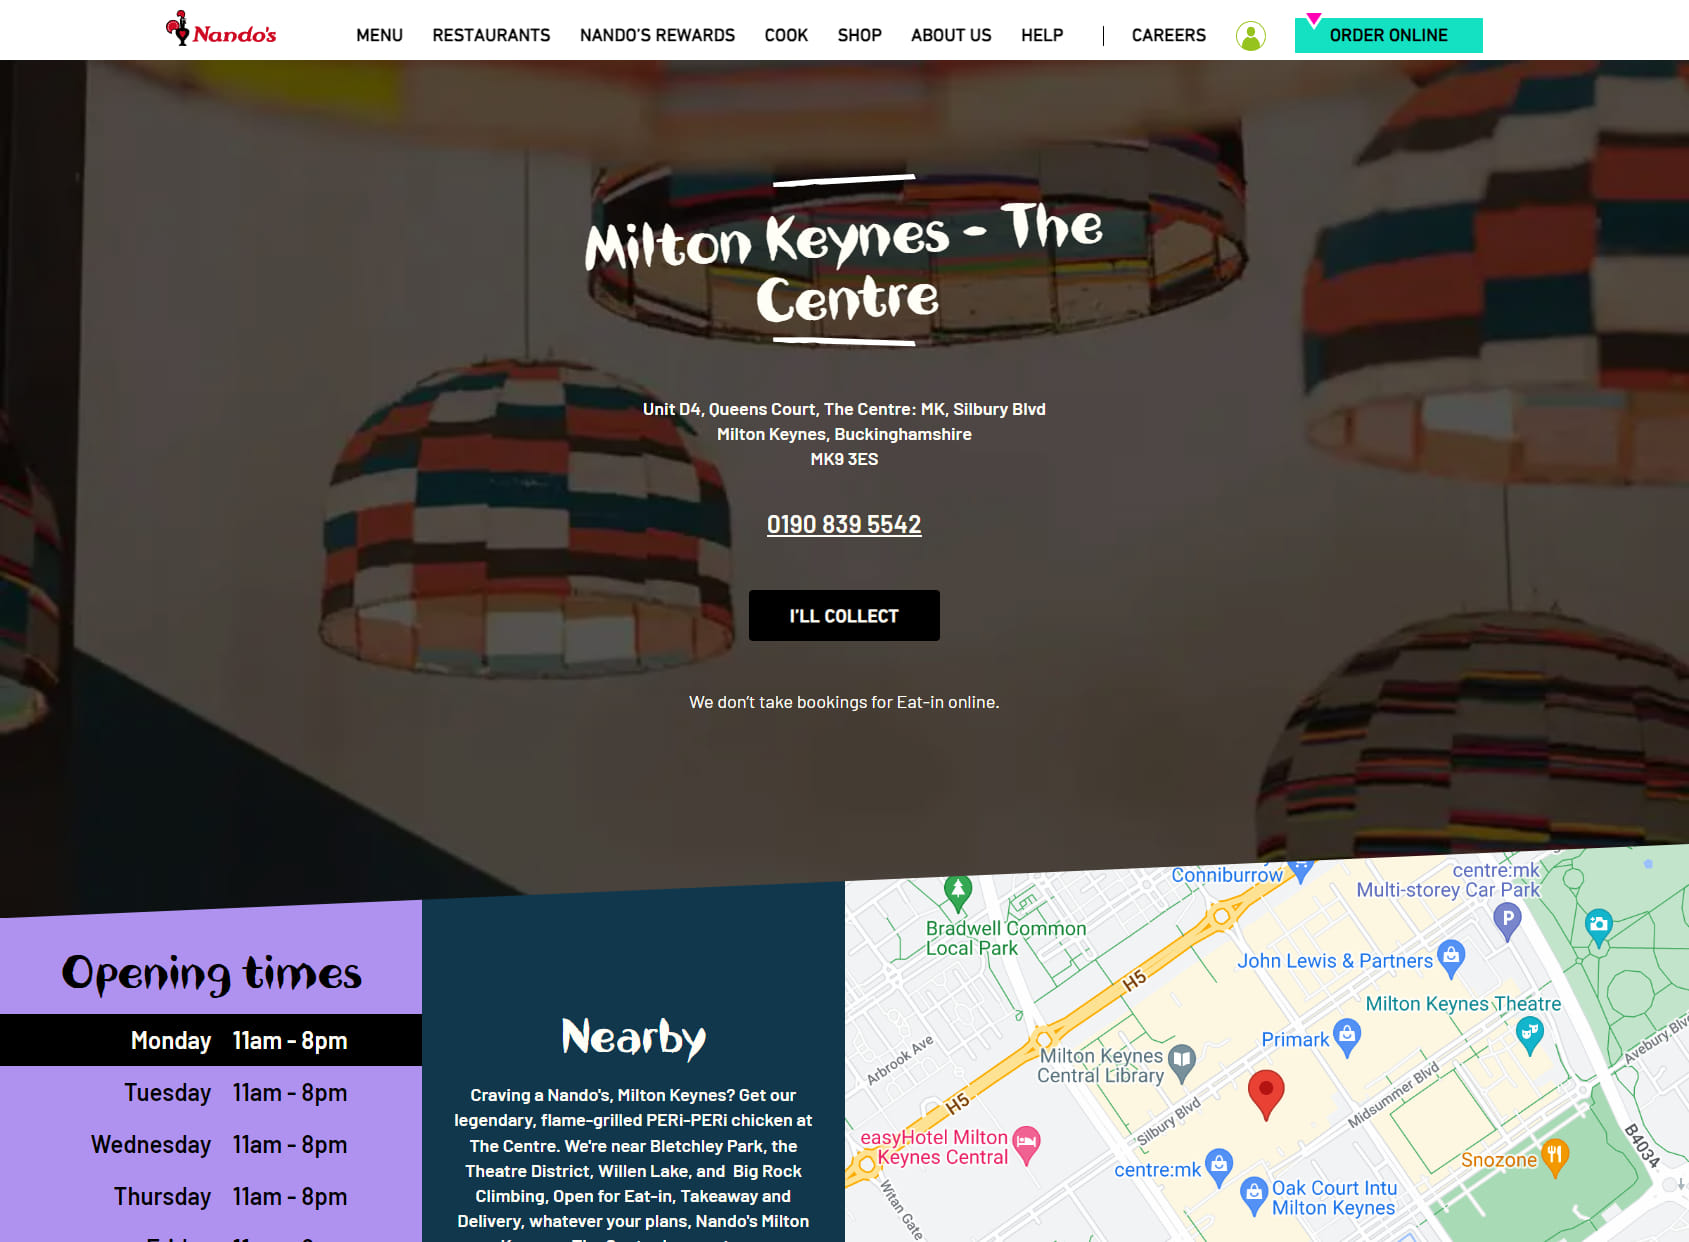 Nando's Milton Keynes - The Centre